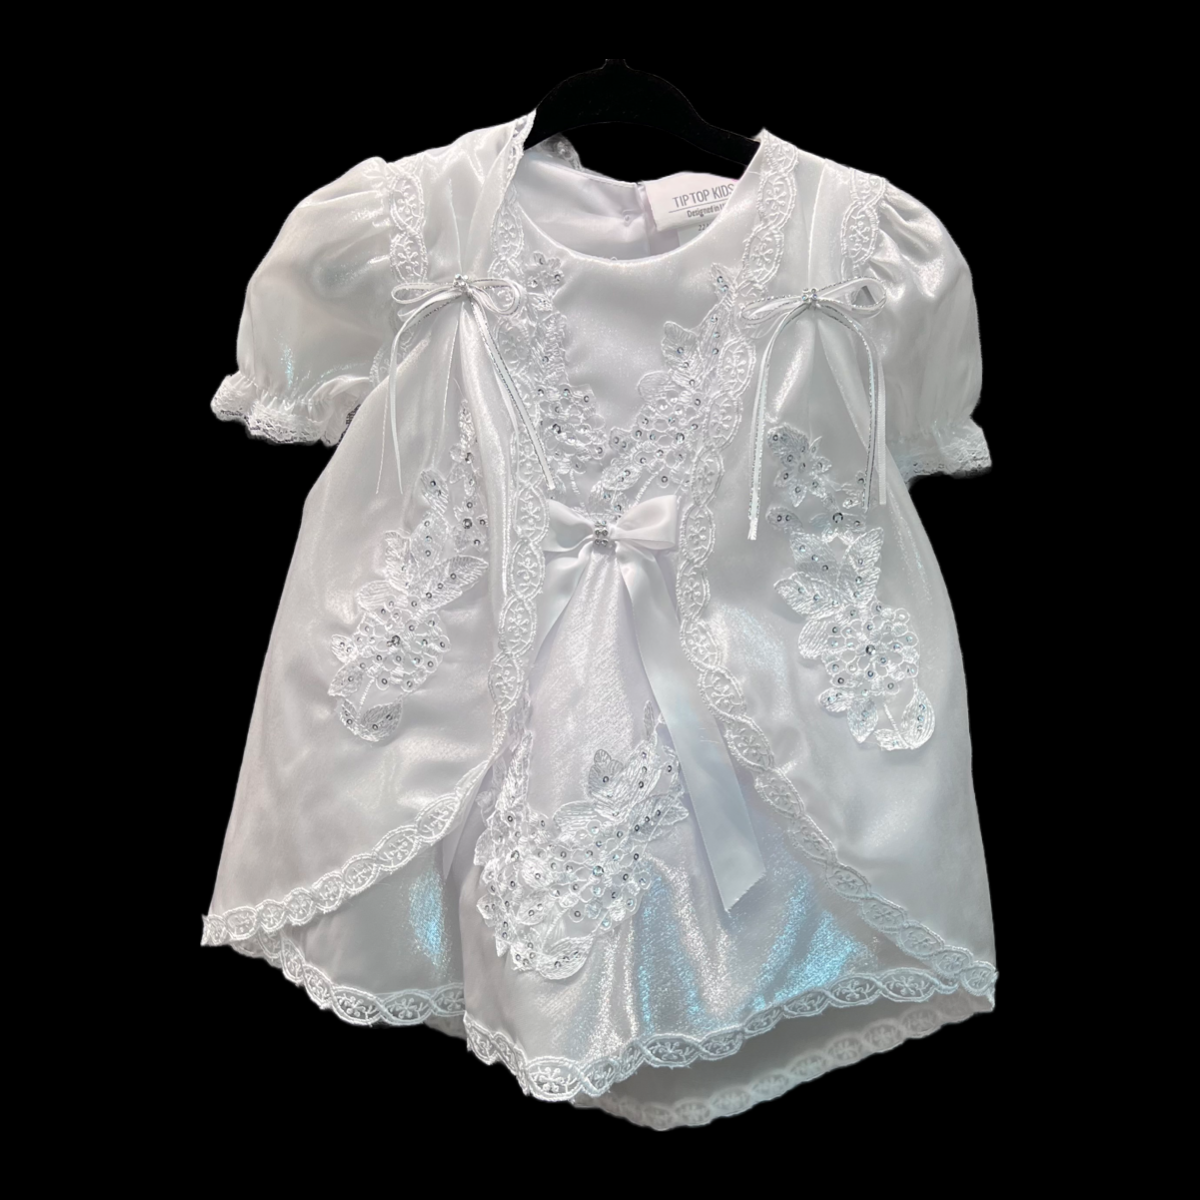 3 PC Embroidered White Satin Baptism Dress